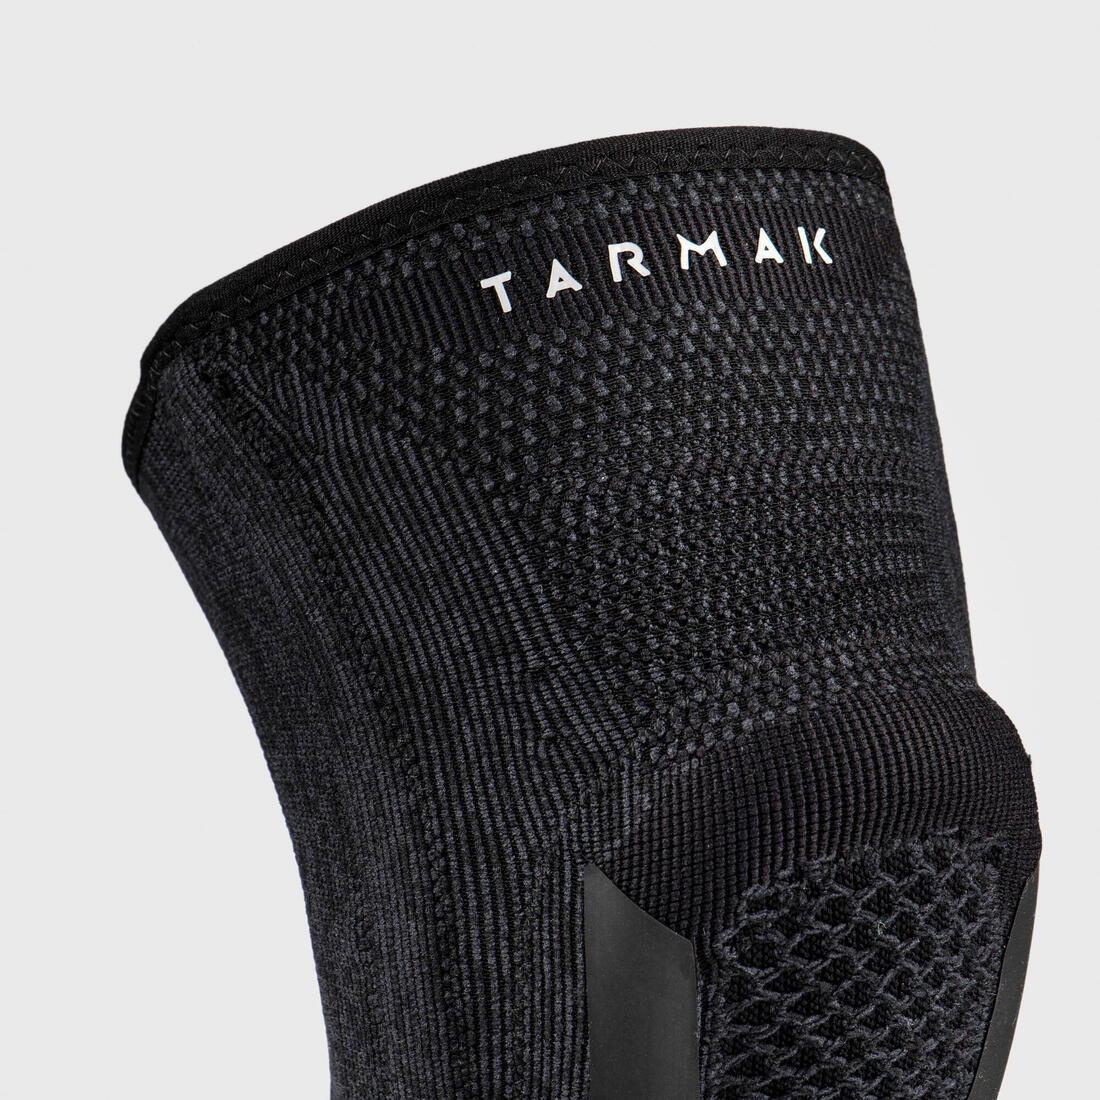 TARMAK(ターマック) バスケットボール 膝および膝蓋骨サポート Strong100 左右対応 1枚入 大人用